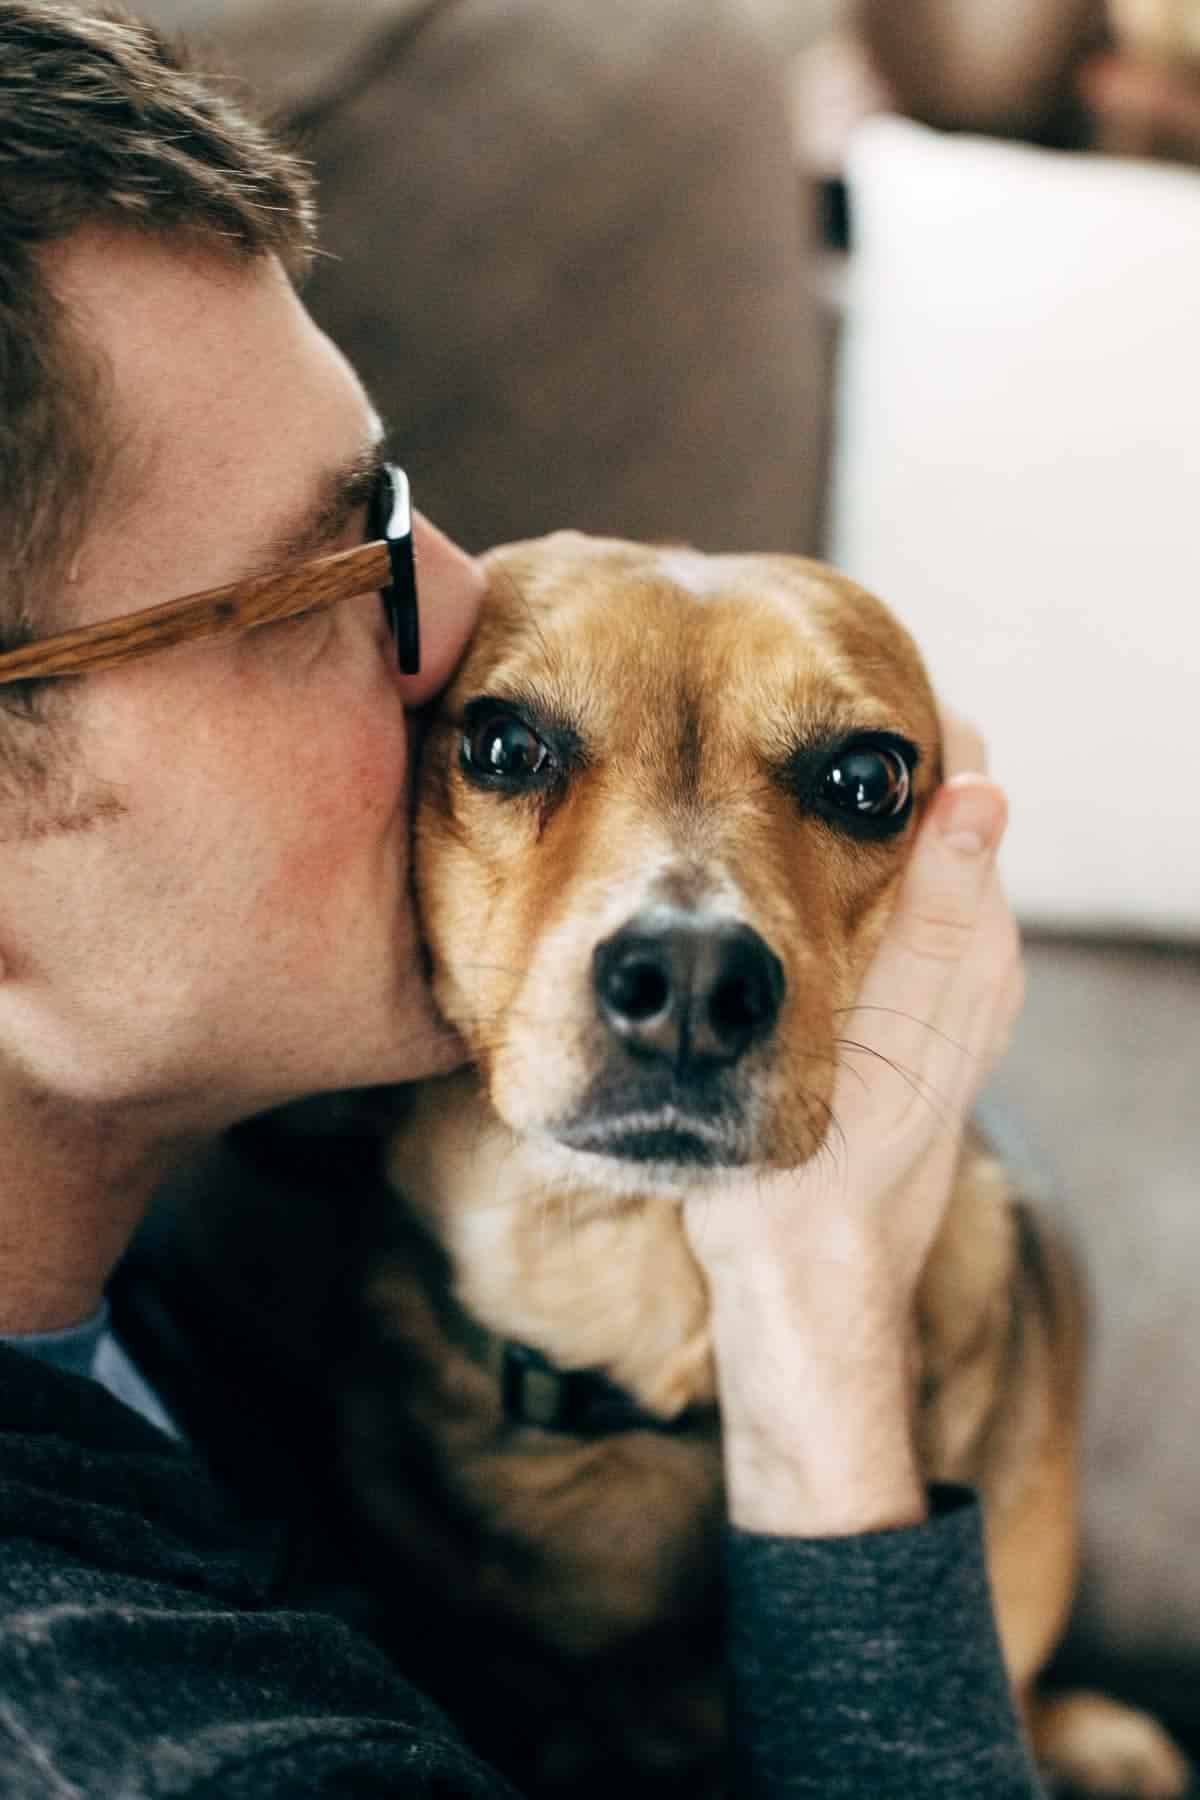 Man wearing glasses kissing a dog.